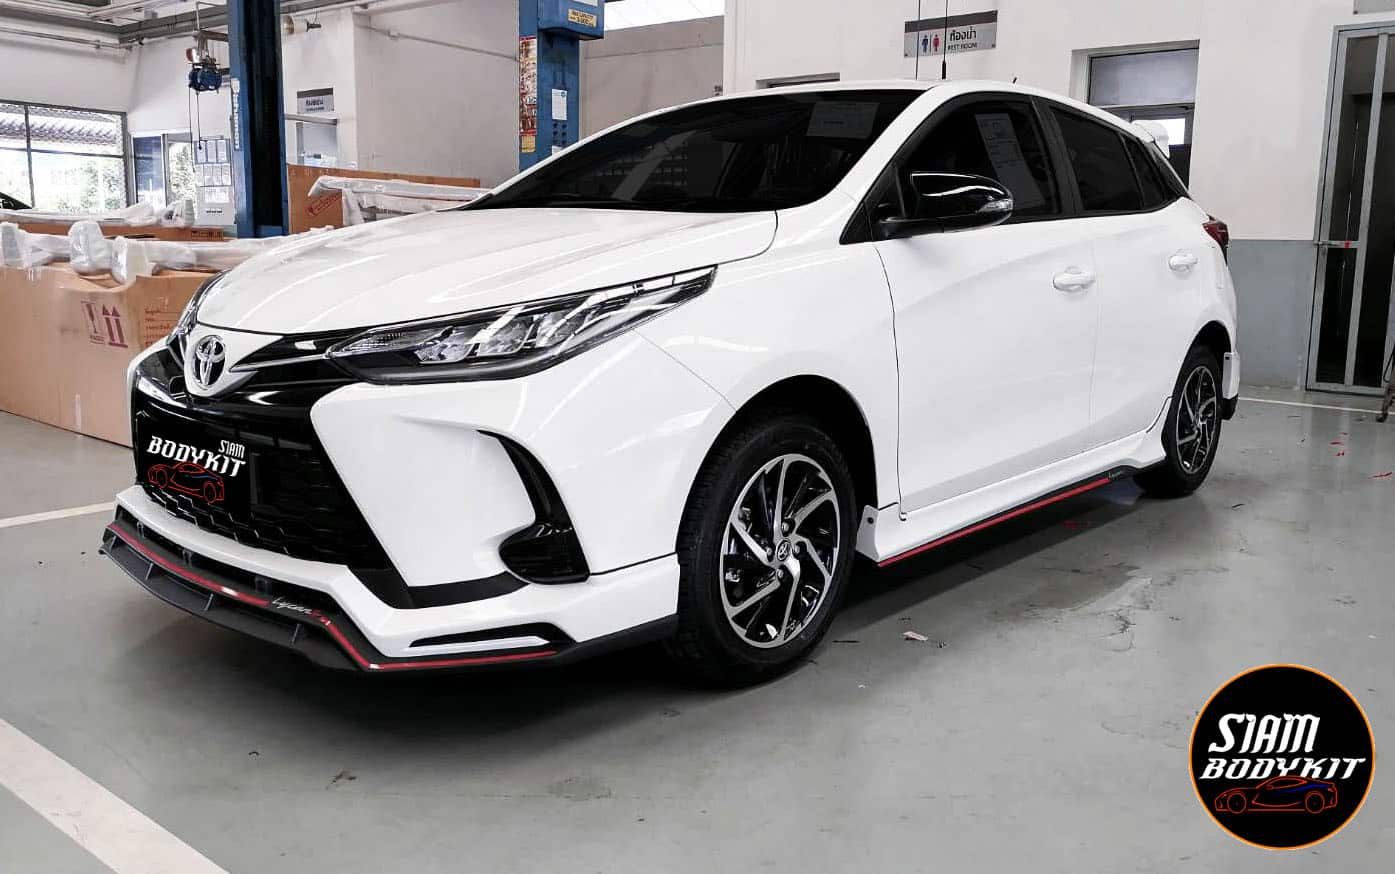 Lycan (Set 5 pcs) Bodykit for Toyota Yaris Hatchback 2020-2021 (COLOR)